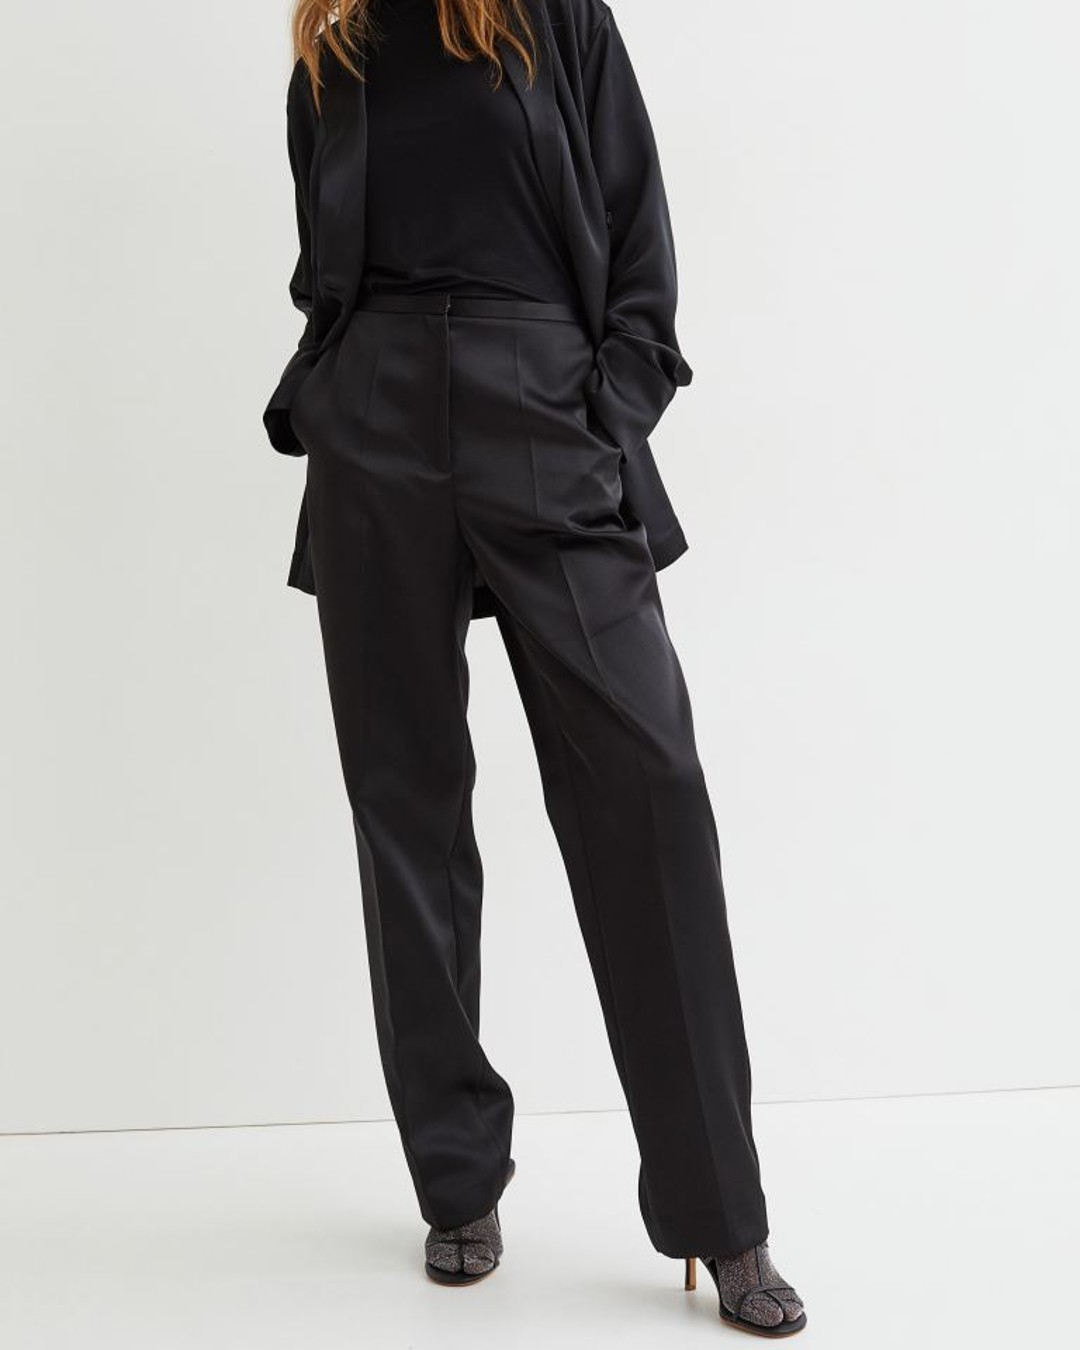 Top more than 83 black dress work pants - in.eteachers